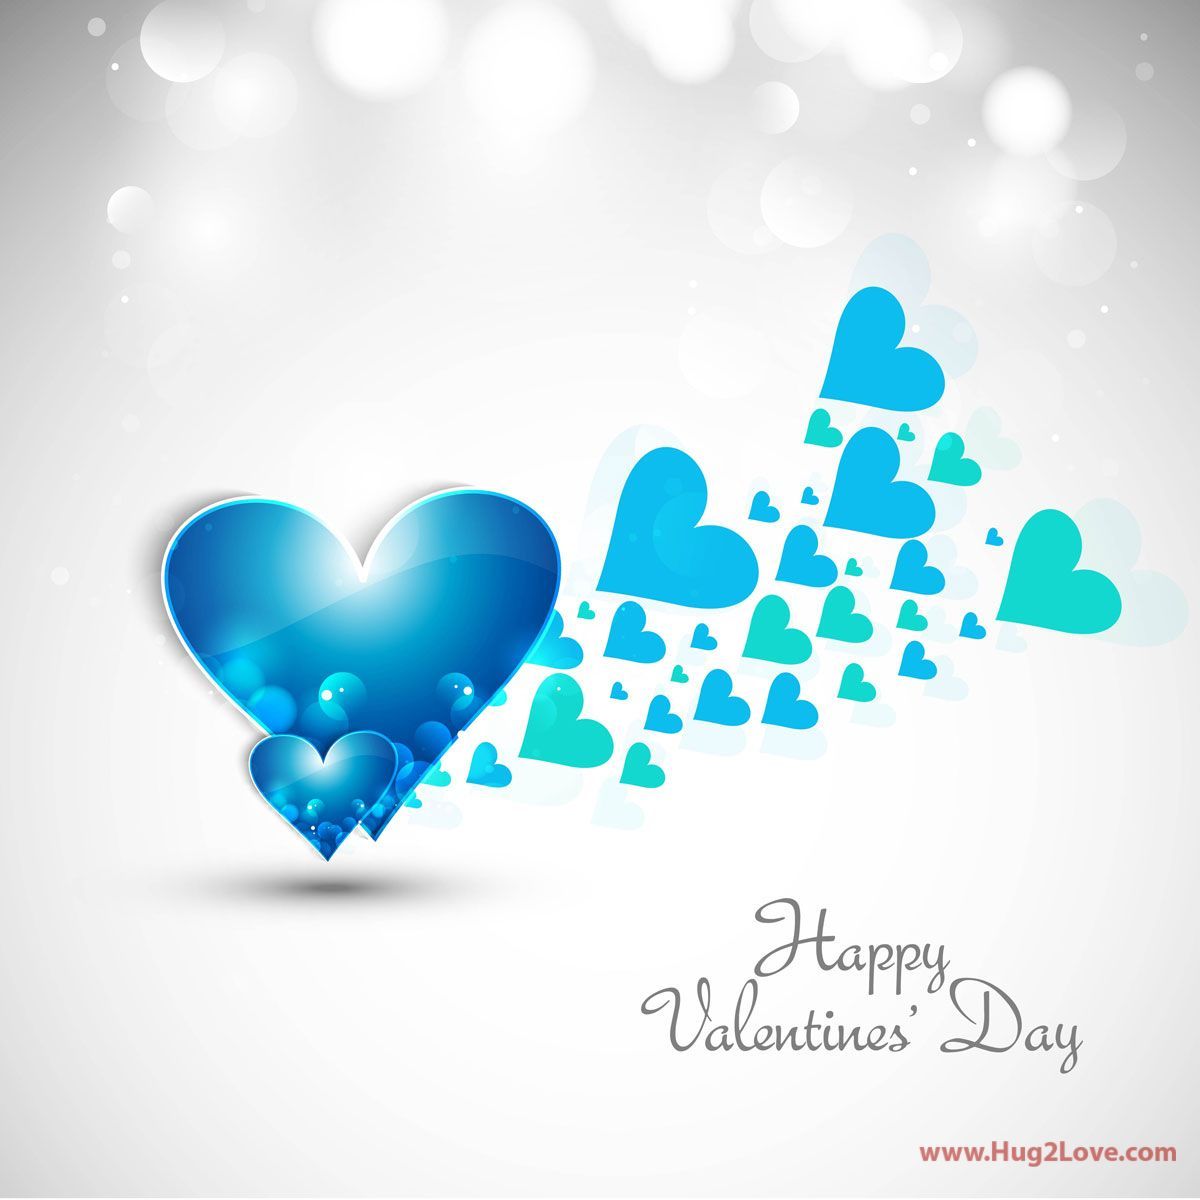 Happy Valentine's Day Image & Wallpaper 2016. Happy valentines day card, Happy valentines day, Happy valentines day image